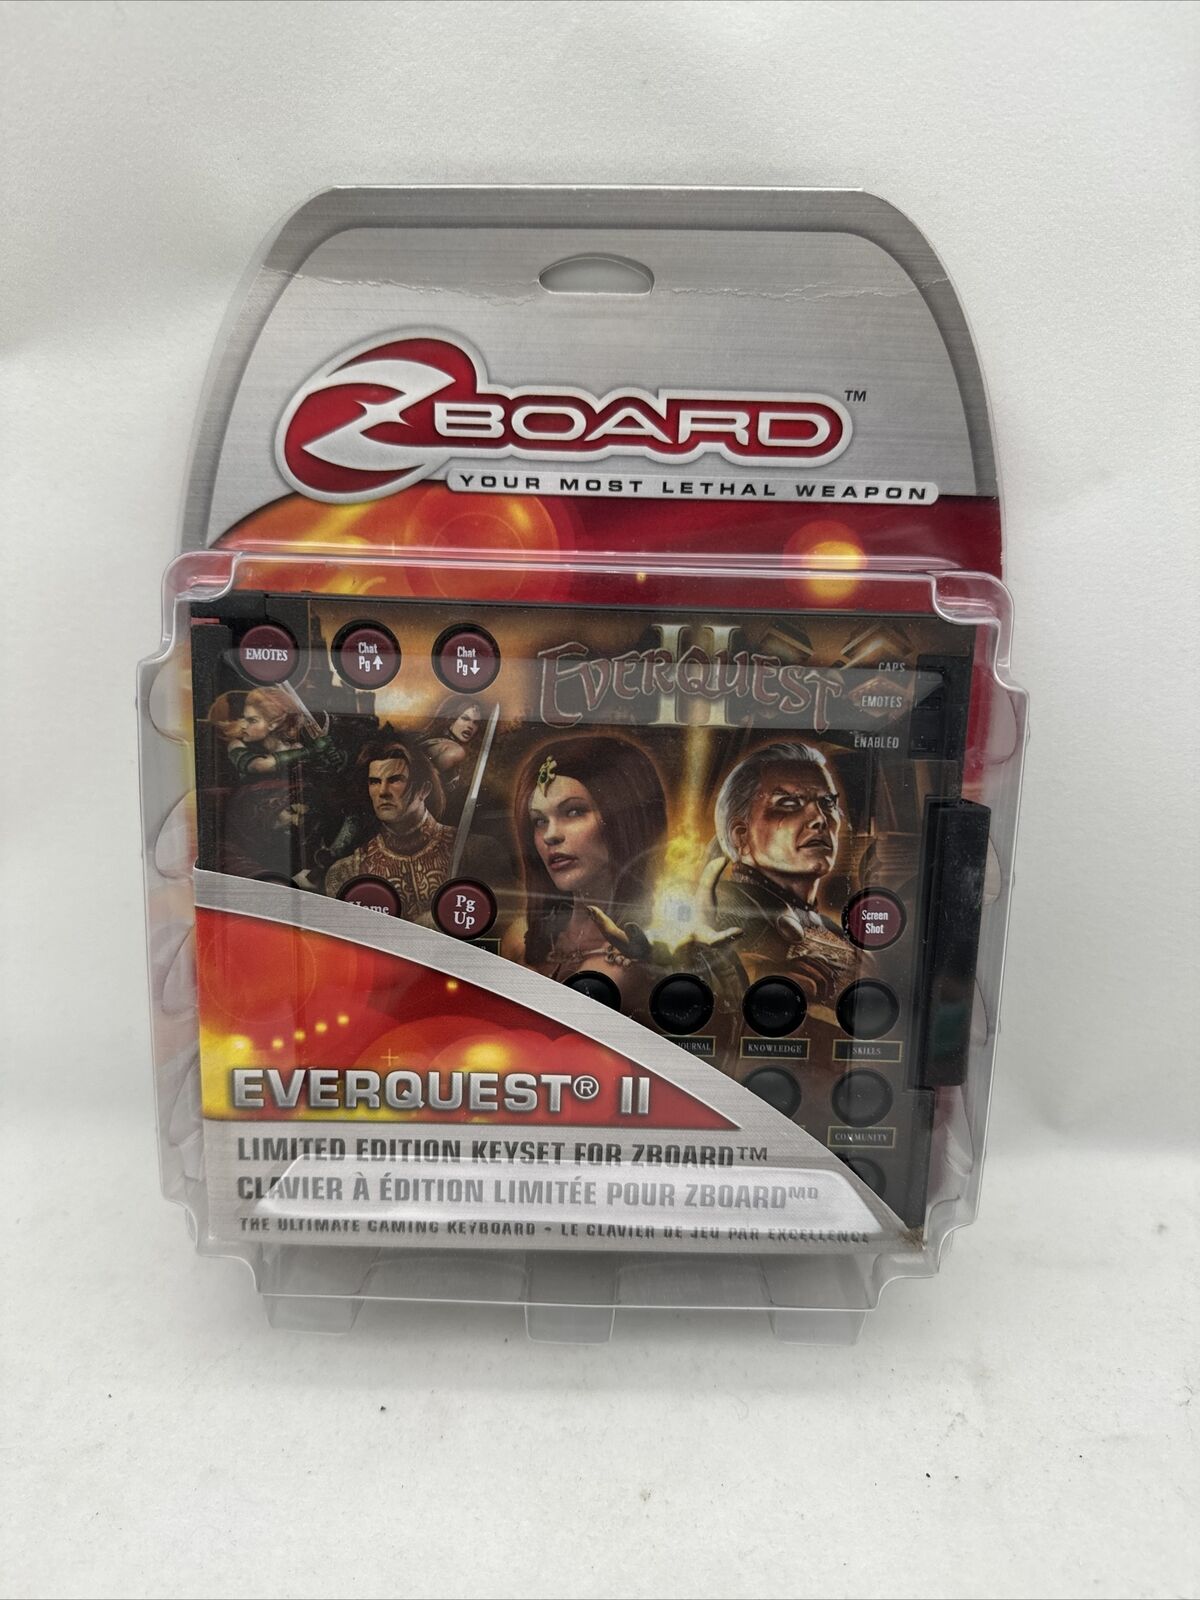 Everquest II Zboard Limited Edition Gaming Keyboard Keyset NEW